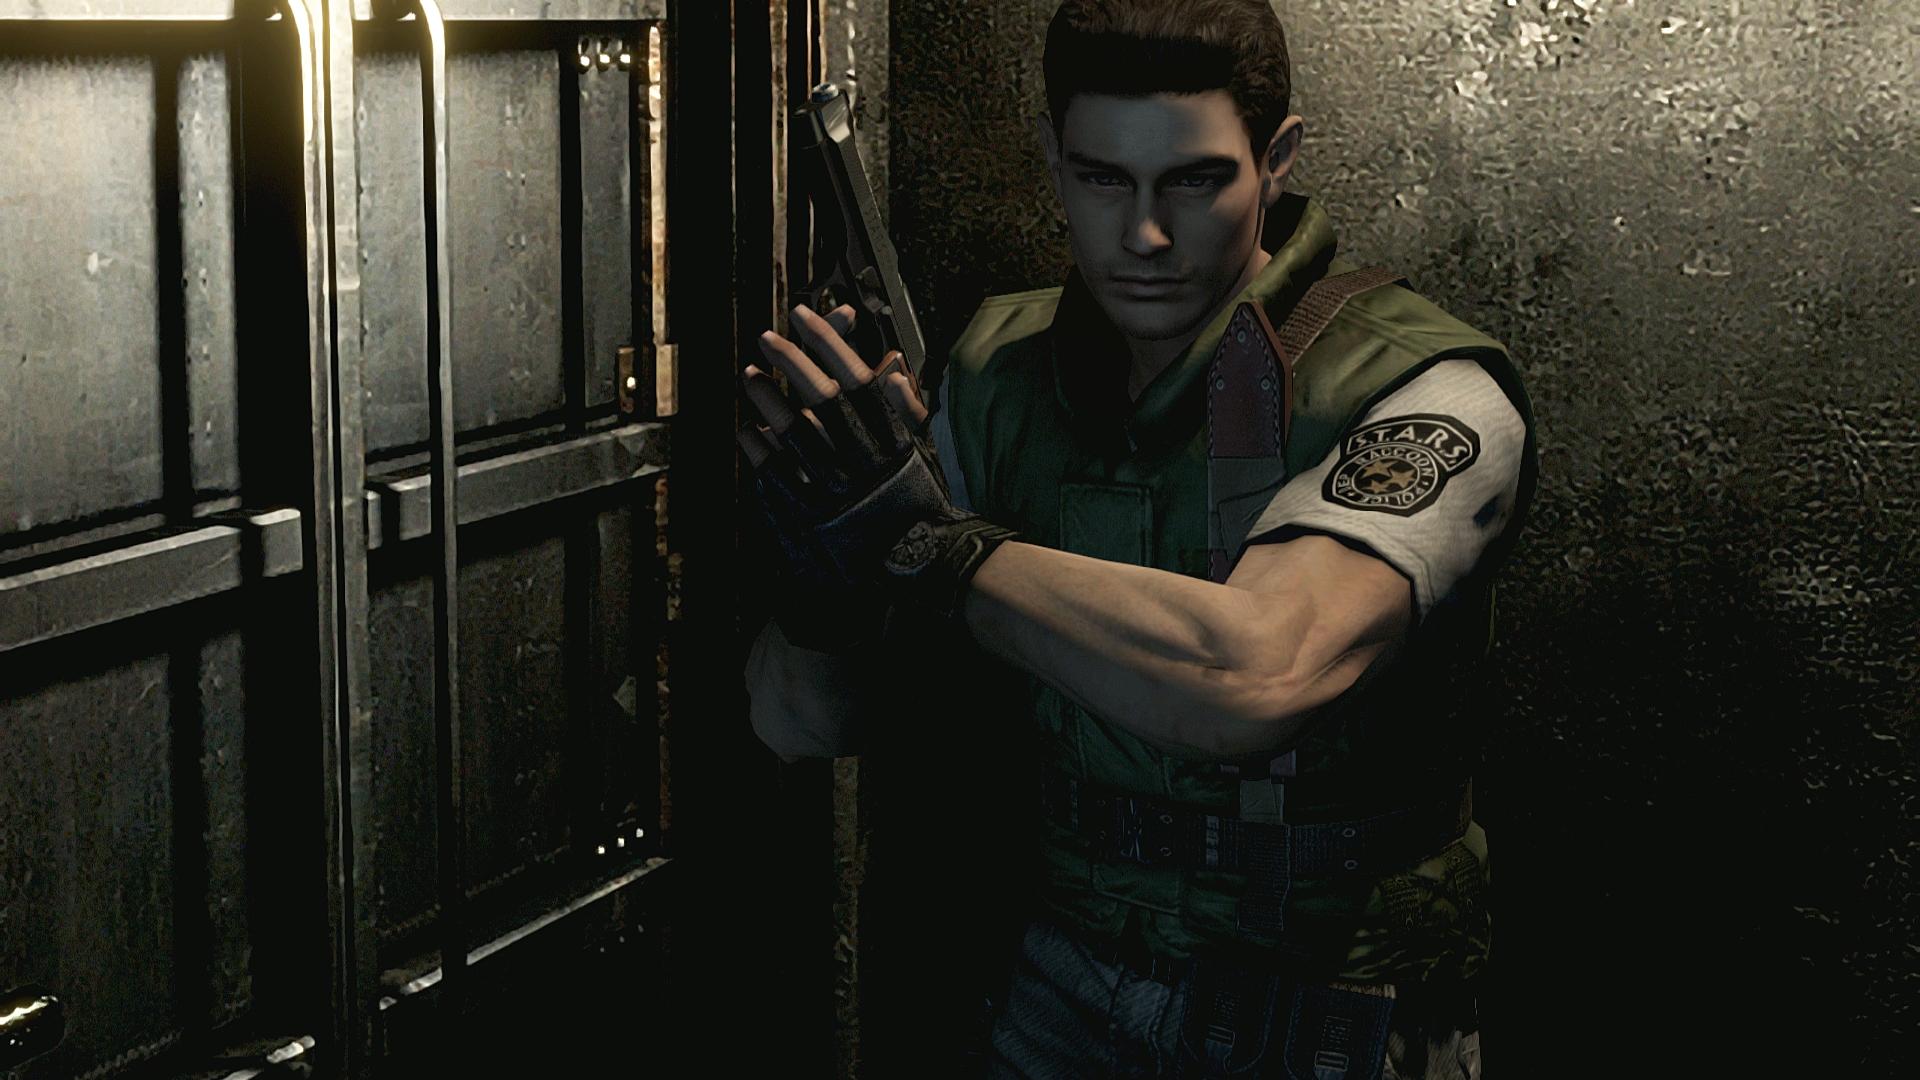 Resident Evil HD Remaster PC (2015) vs. Original (2002) Graphics Comparison  [FullHD] 